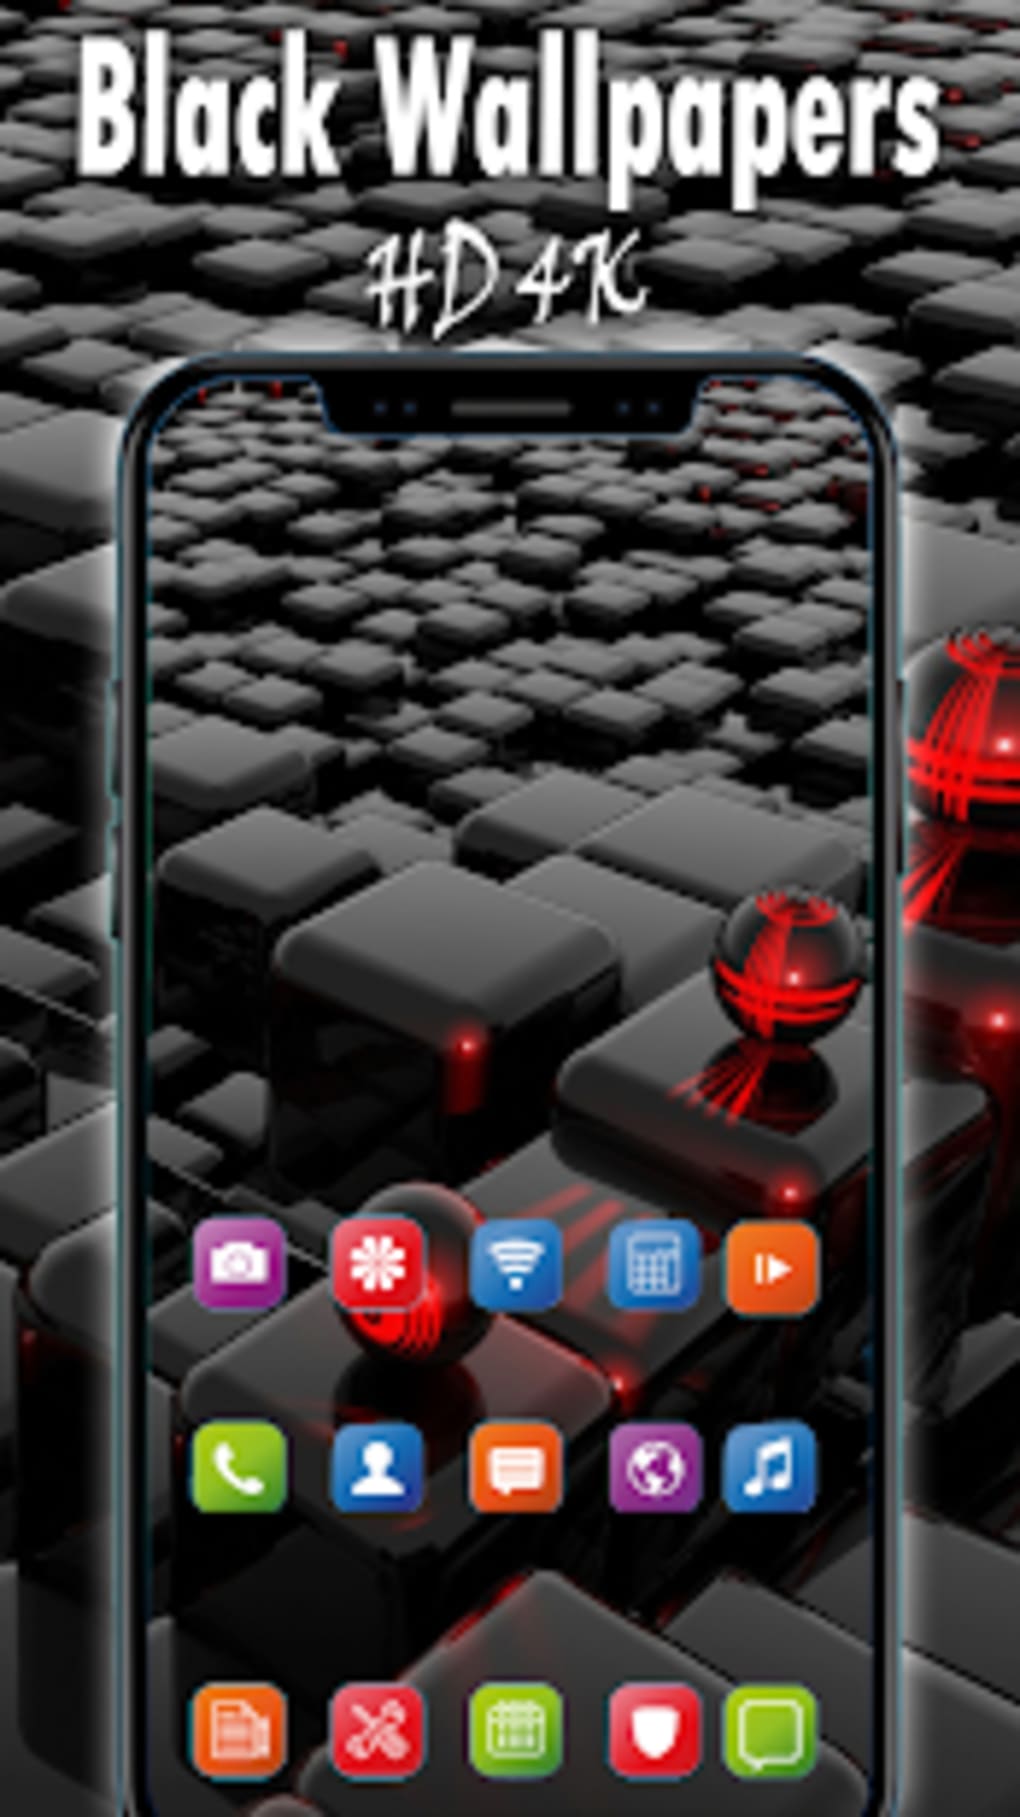 Black Wallpaper HD 4K Black backgrounds APK Android 版 - 下载